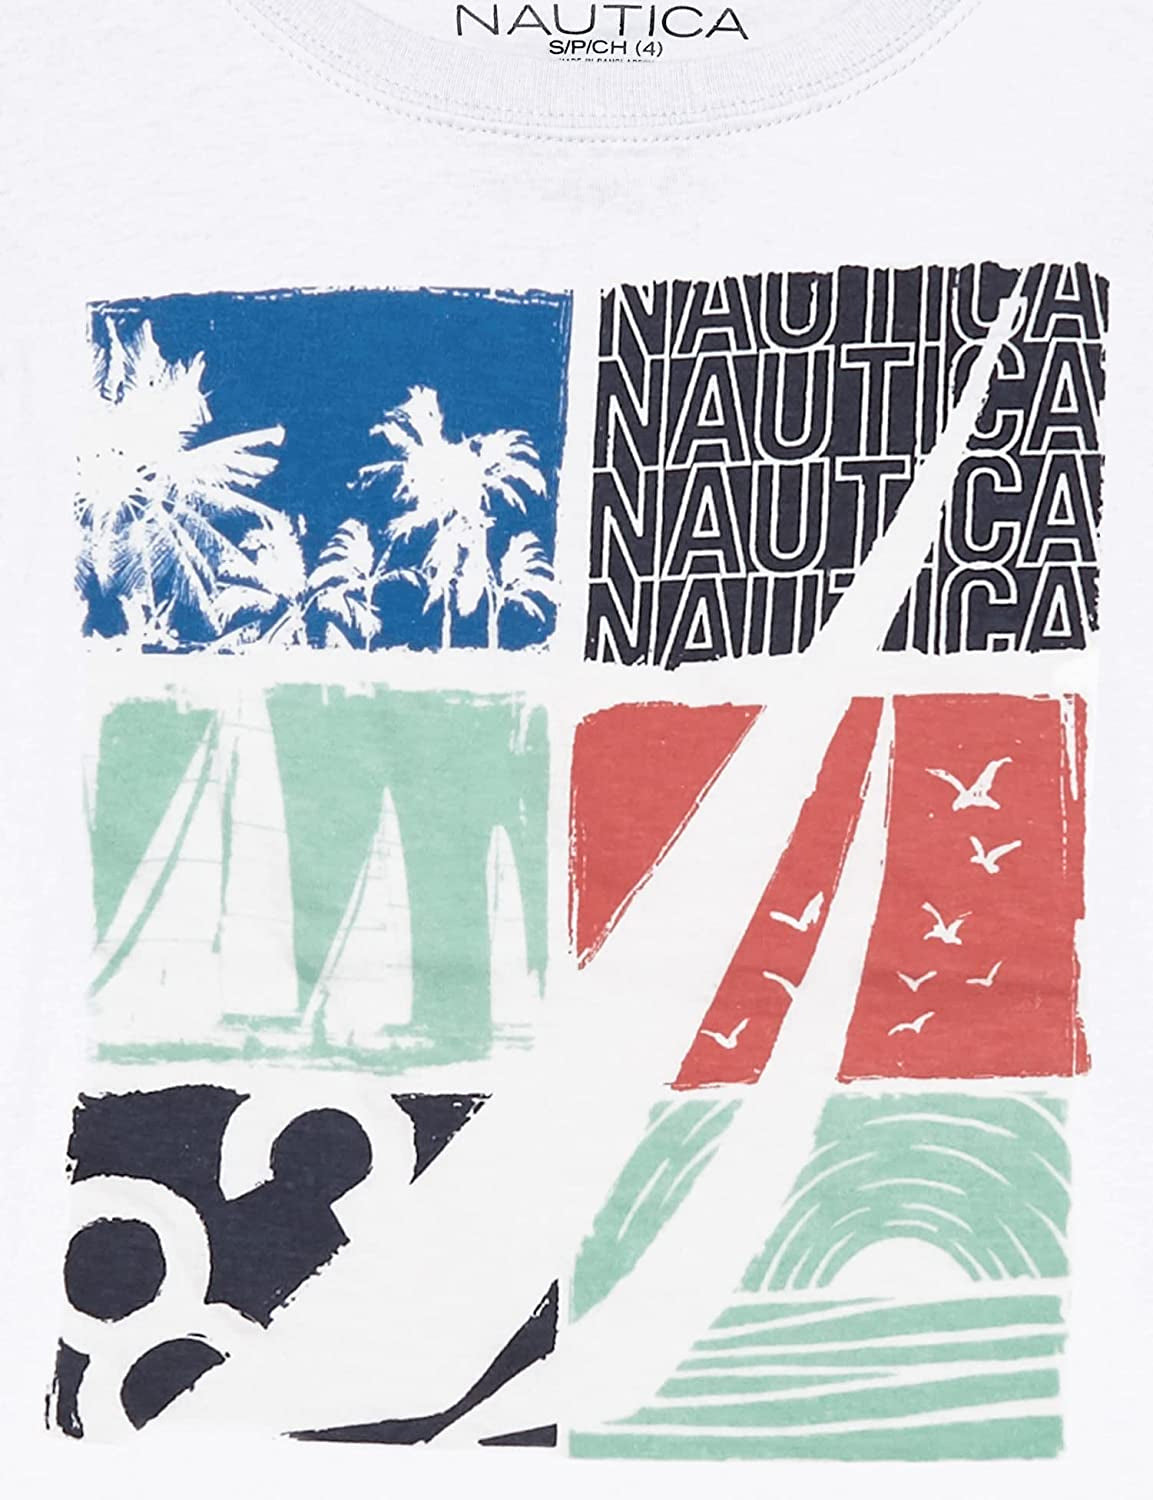 Nautica Boys 4-7 Sail Logo T-Shirt